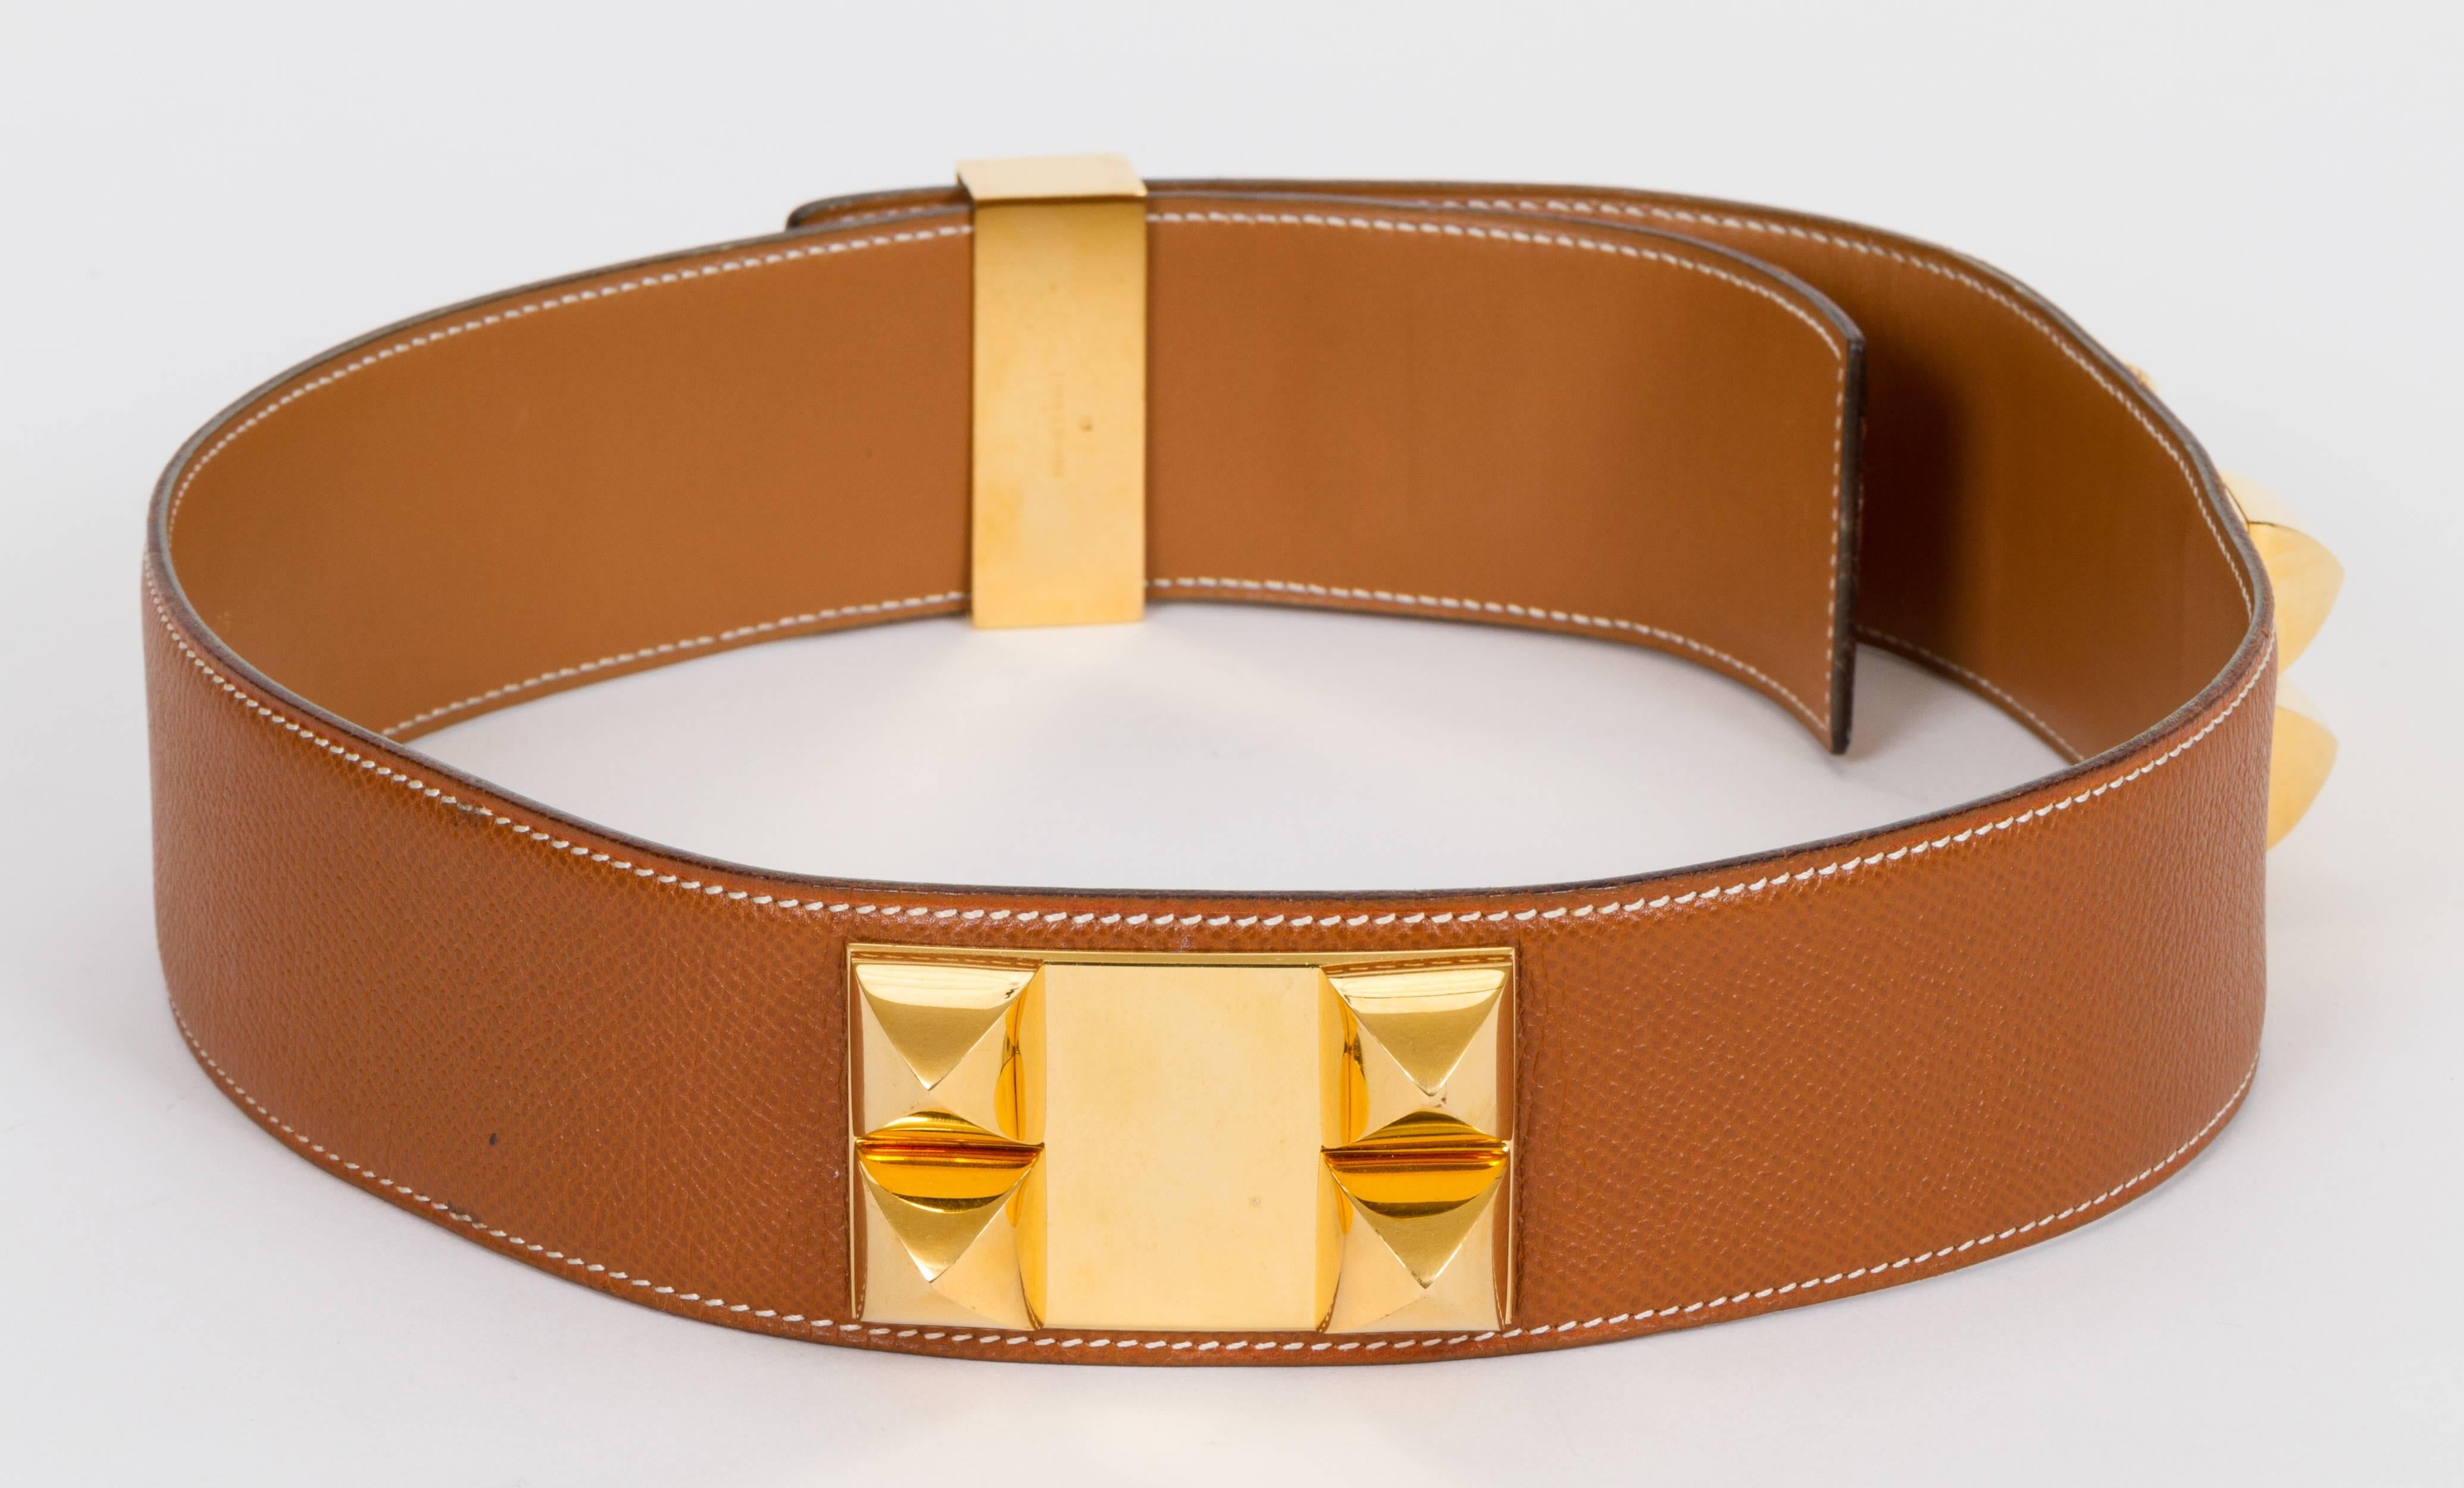 Hermès Collier De Chien 70cm Gold Belt In Good Condition In West Hollywood, CA